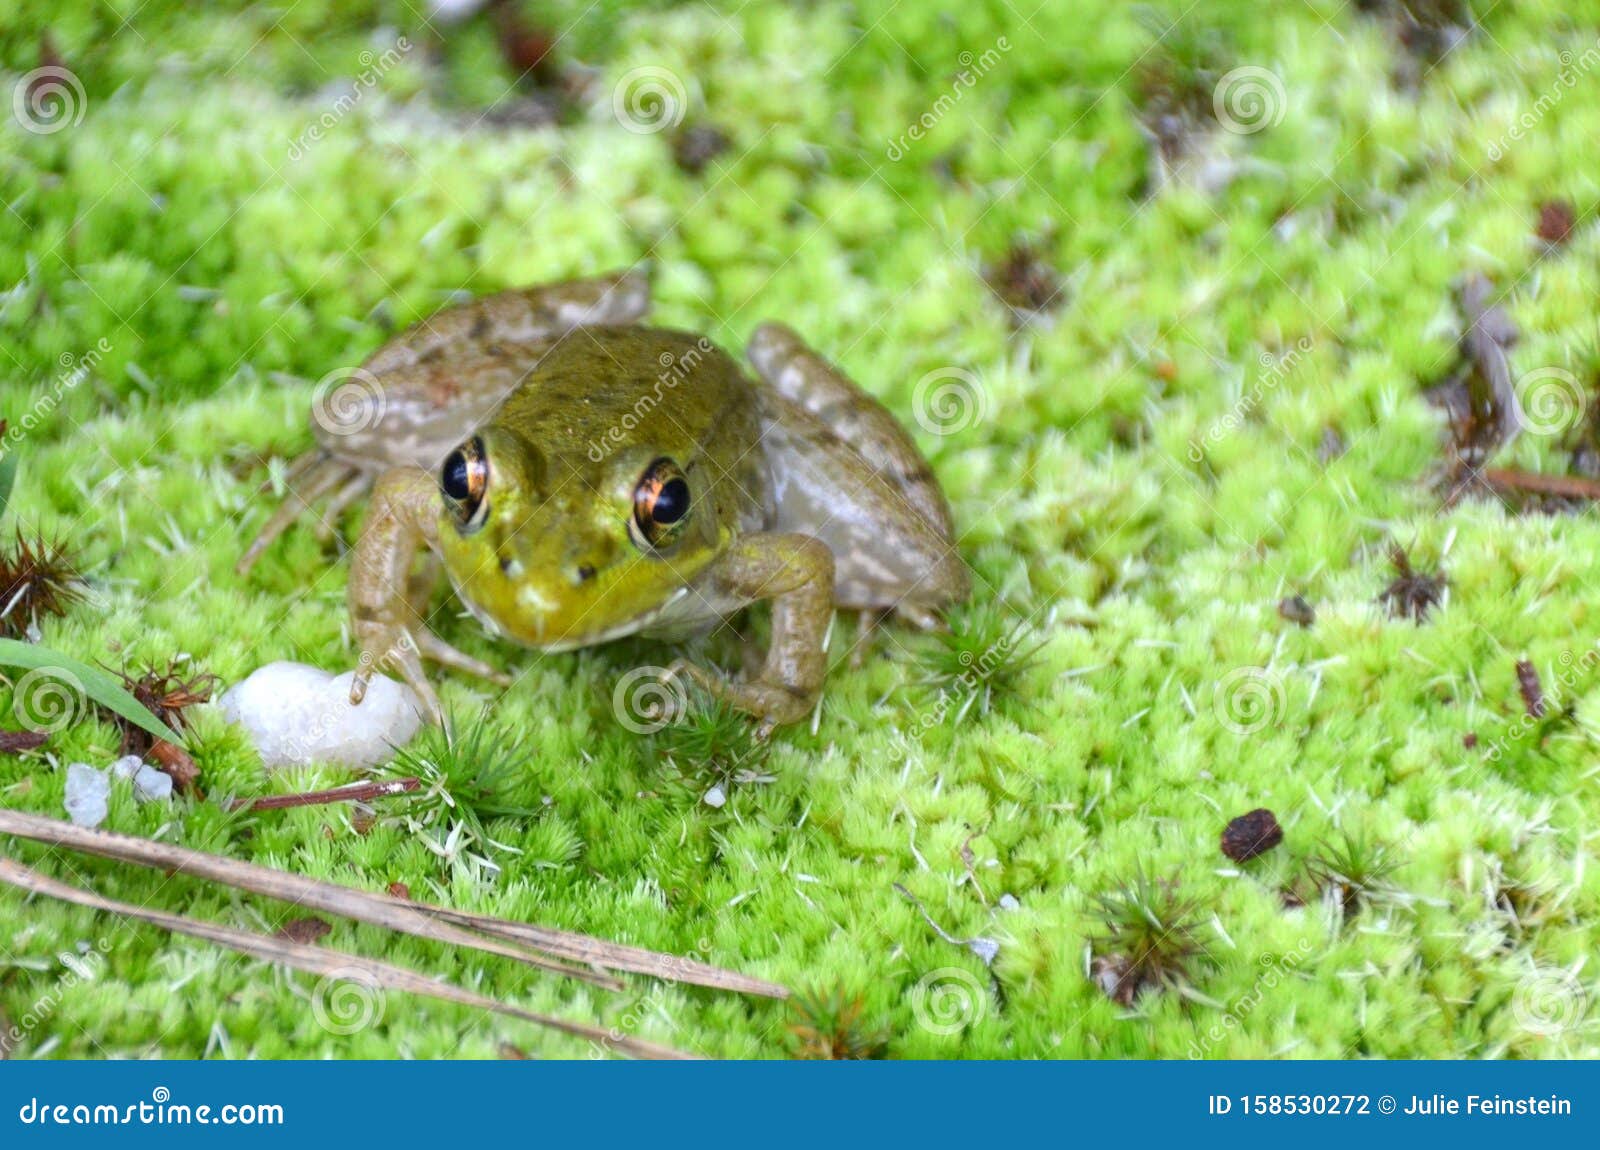 Frog on Moss stock photo. Image of green, cute, amphibian - 158530272